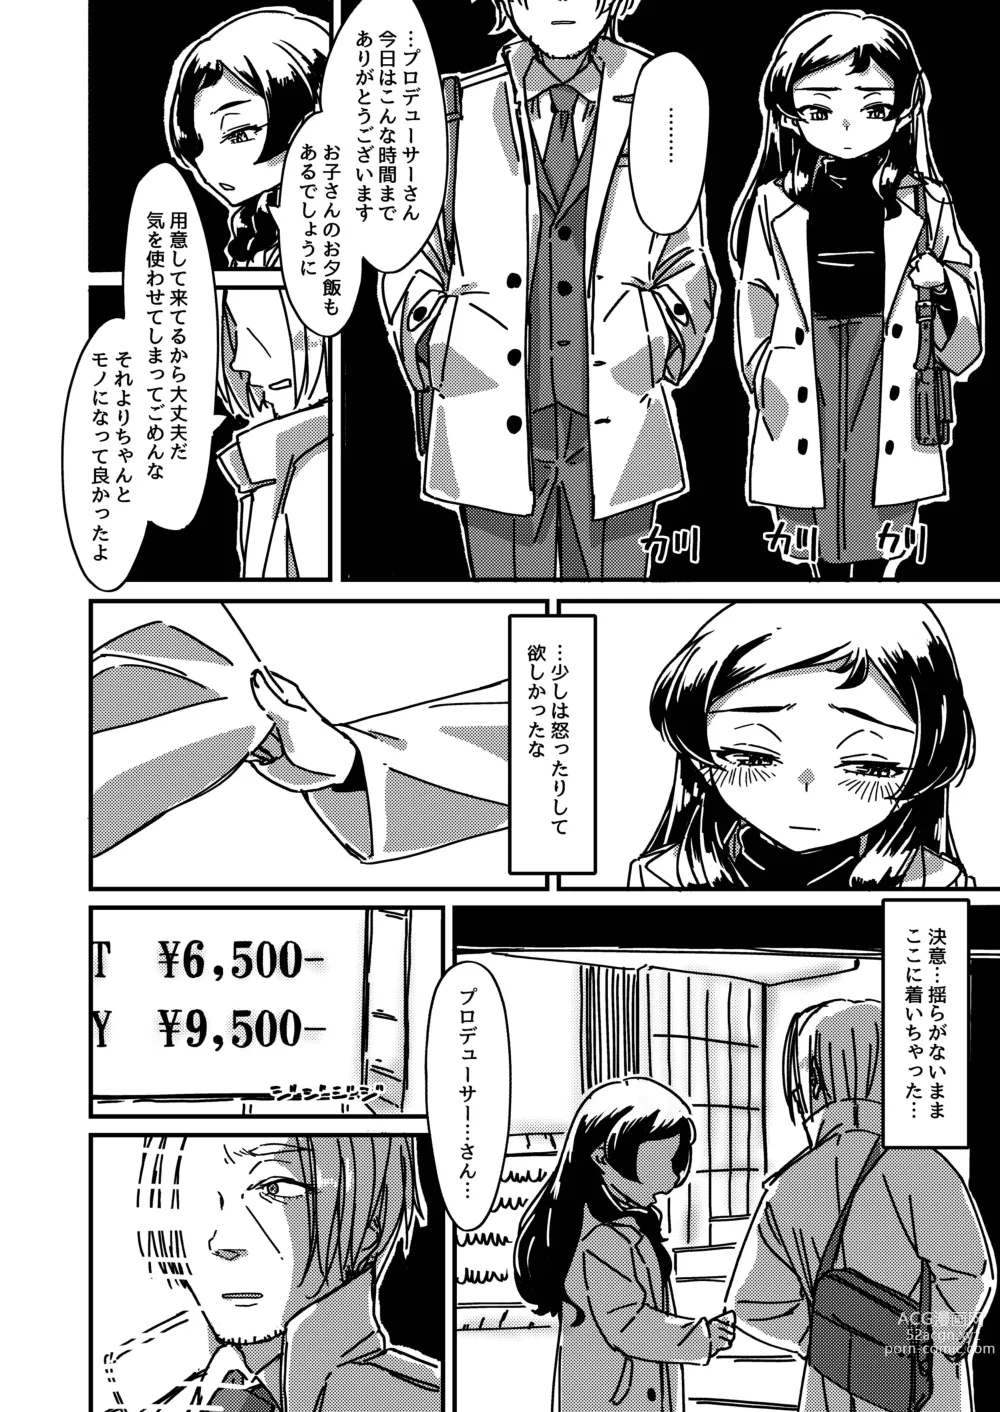 Page 9 of doujinshi Kuroneko no Kyouji + Aruhi no Kuro Usagi